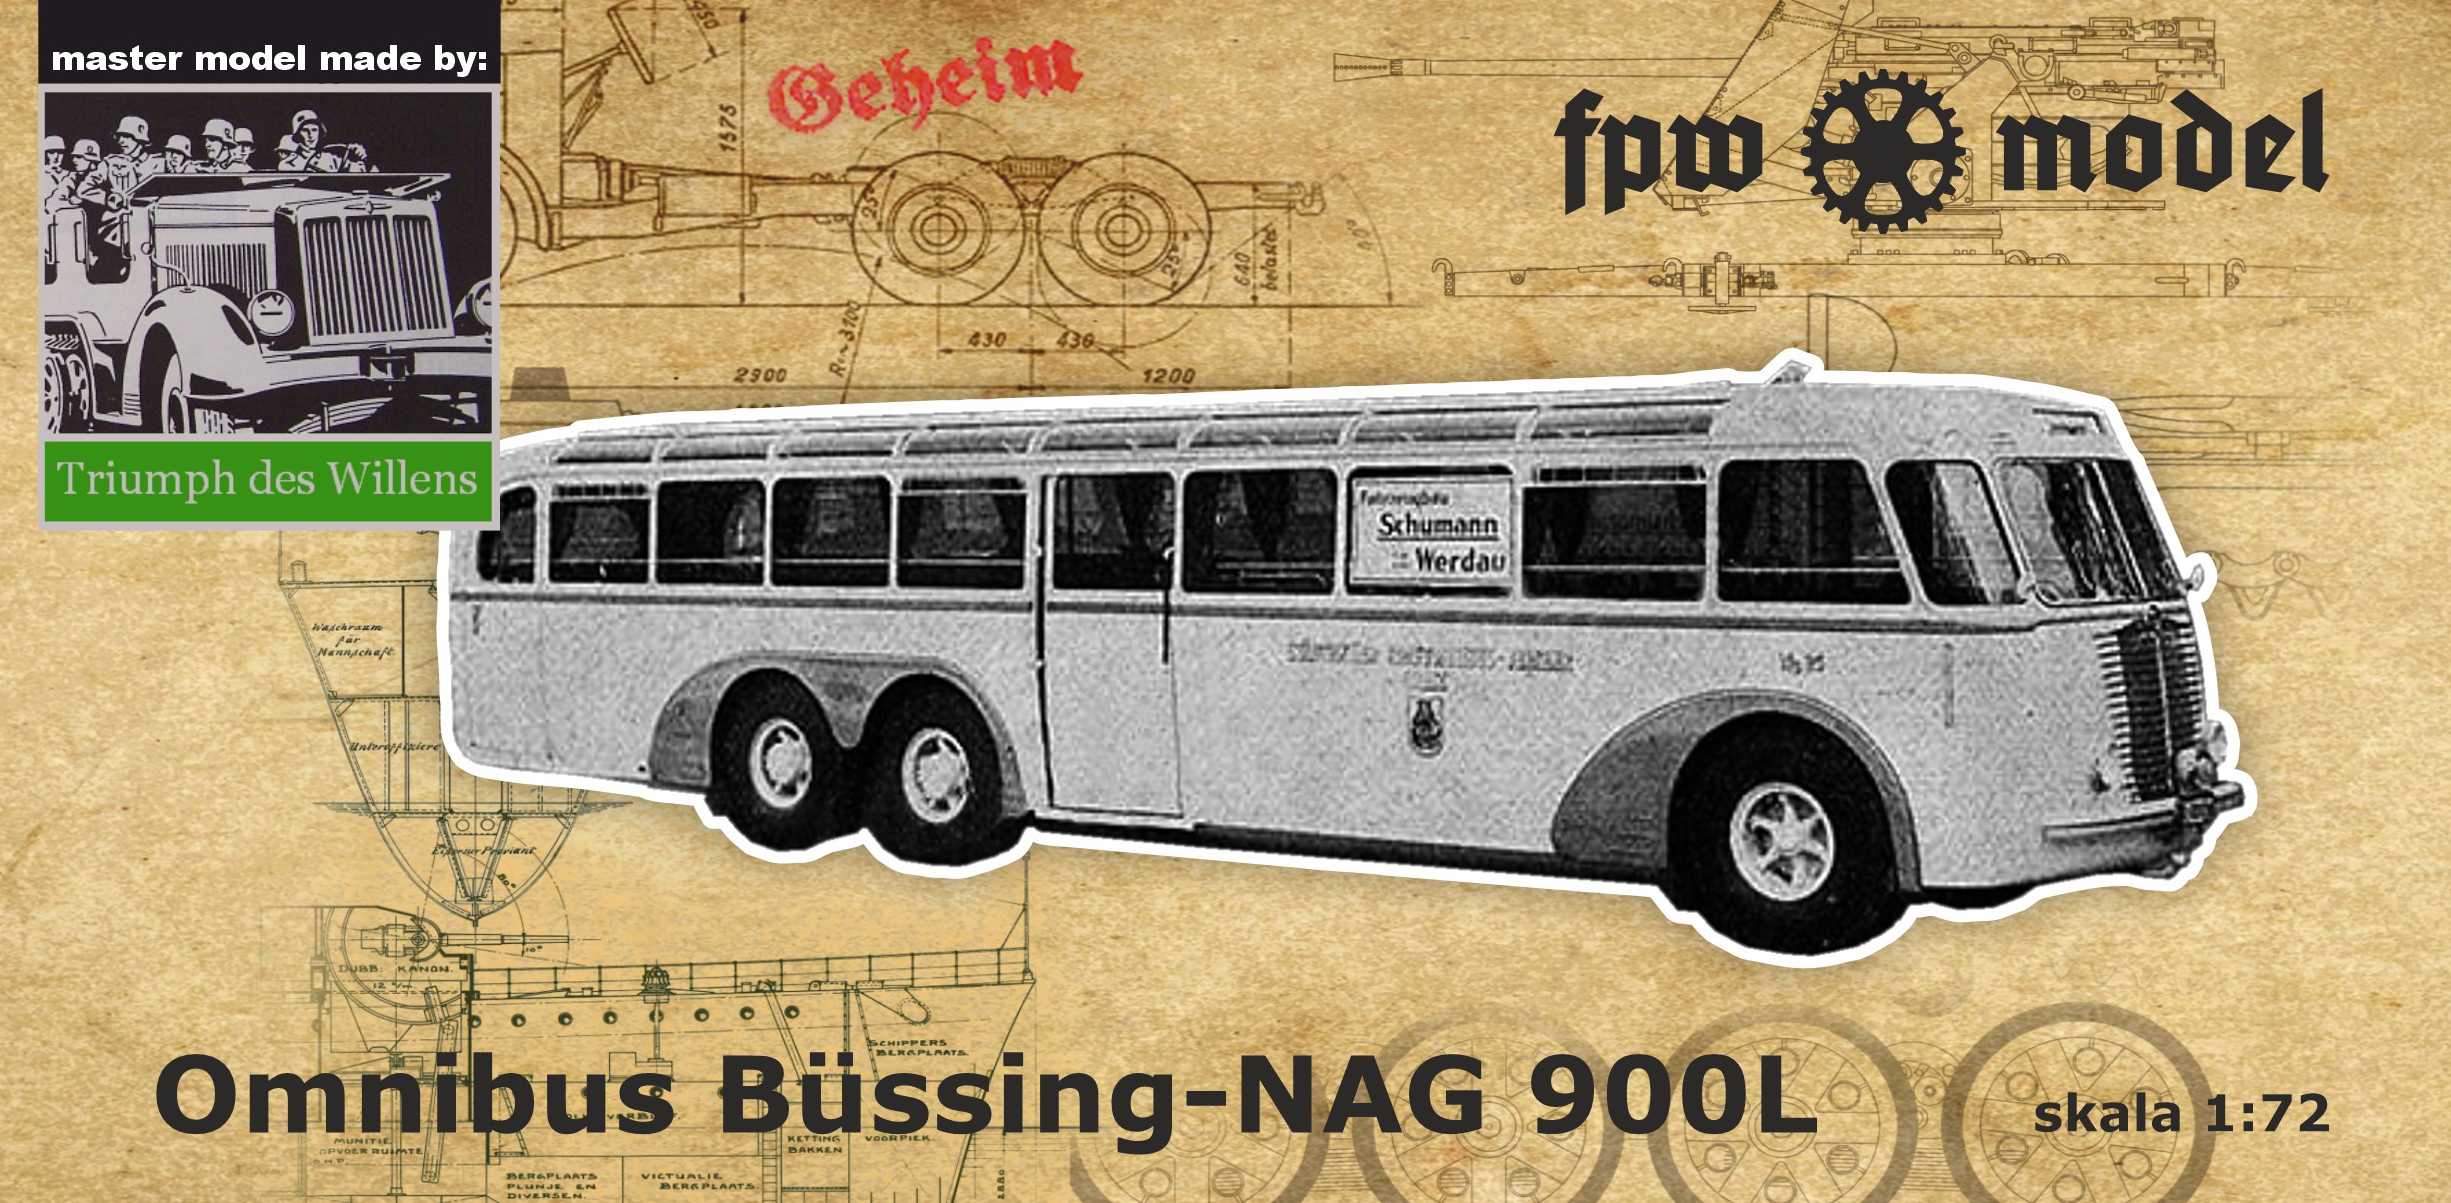 Bussing-NAG 900L omnibus